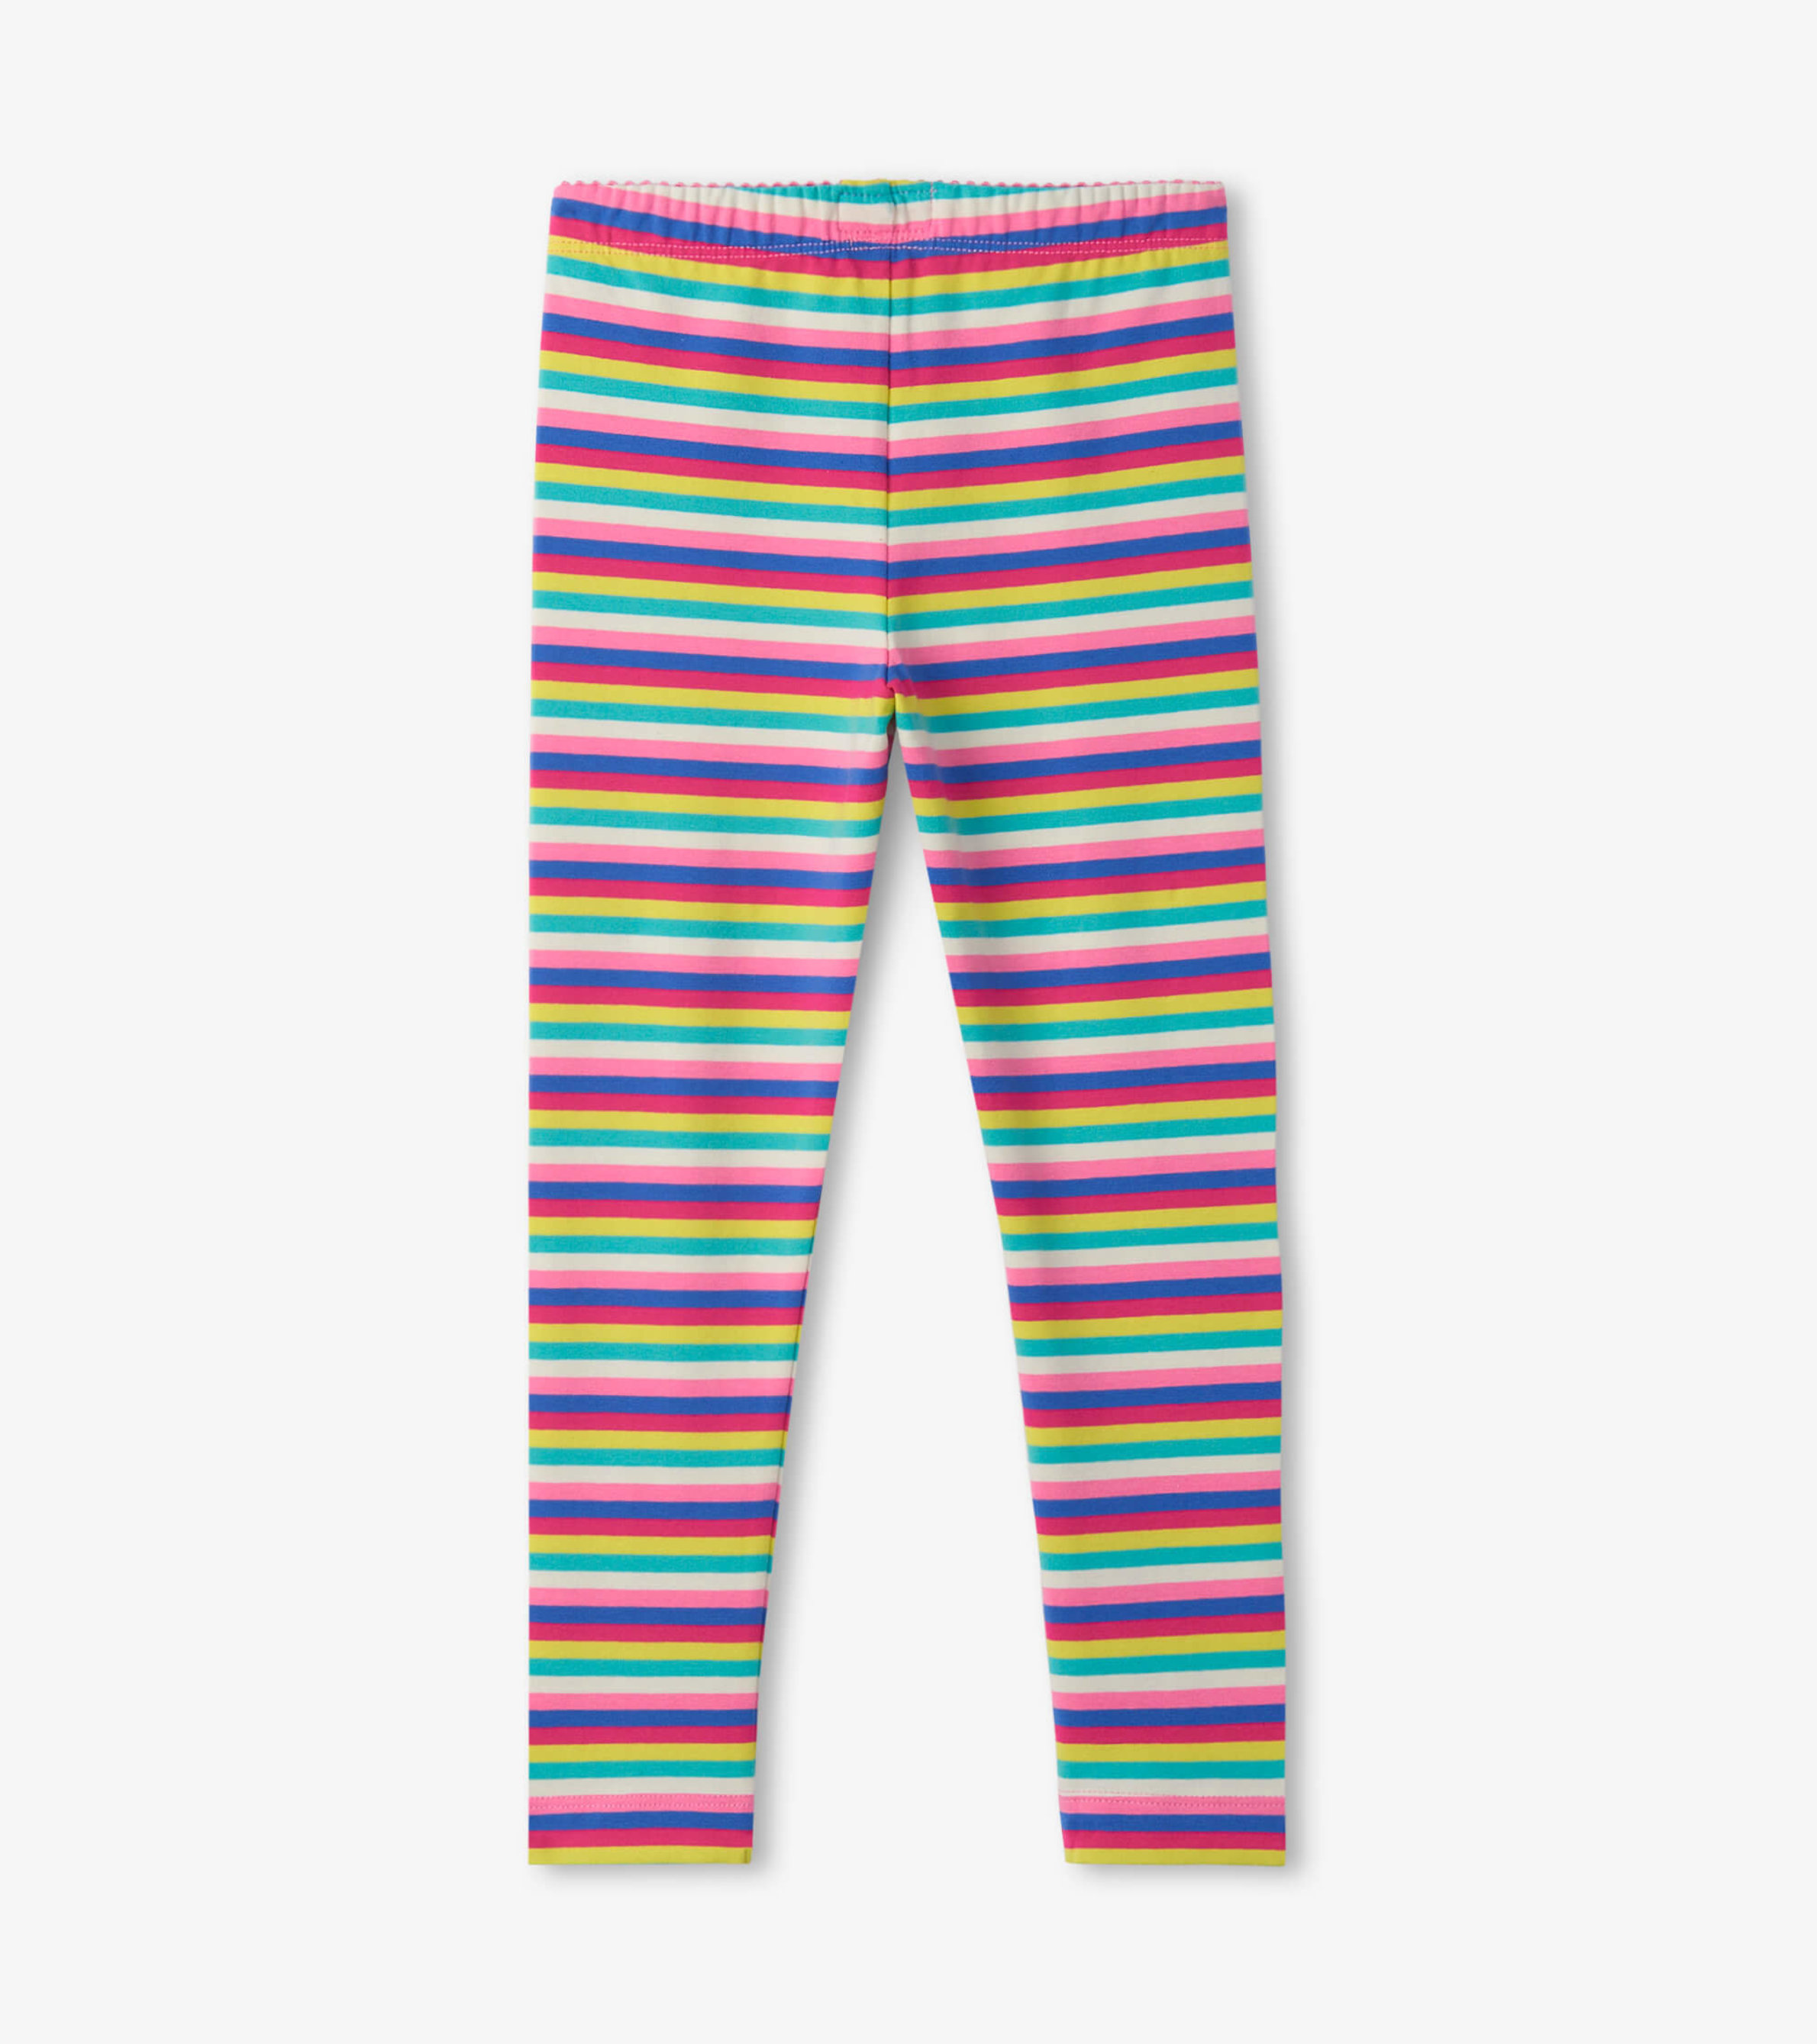  Rainbow Striped Girls Leggings Comfortable Stretch